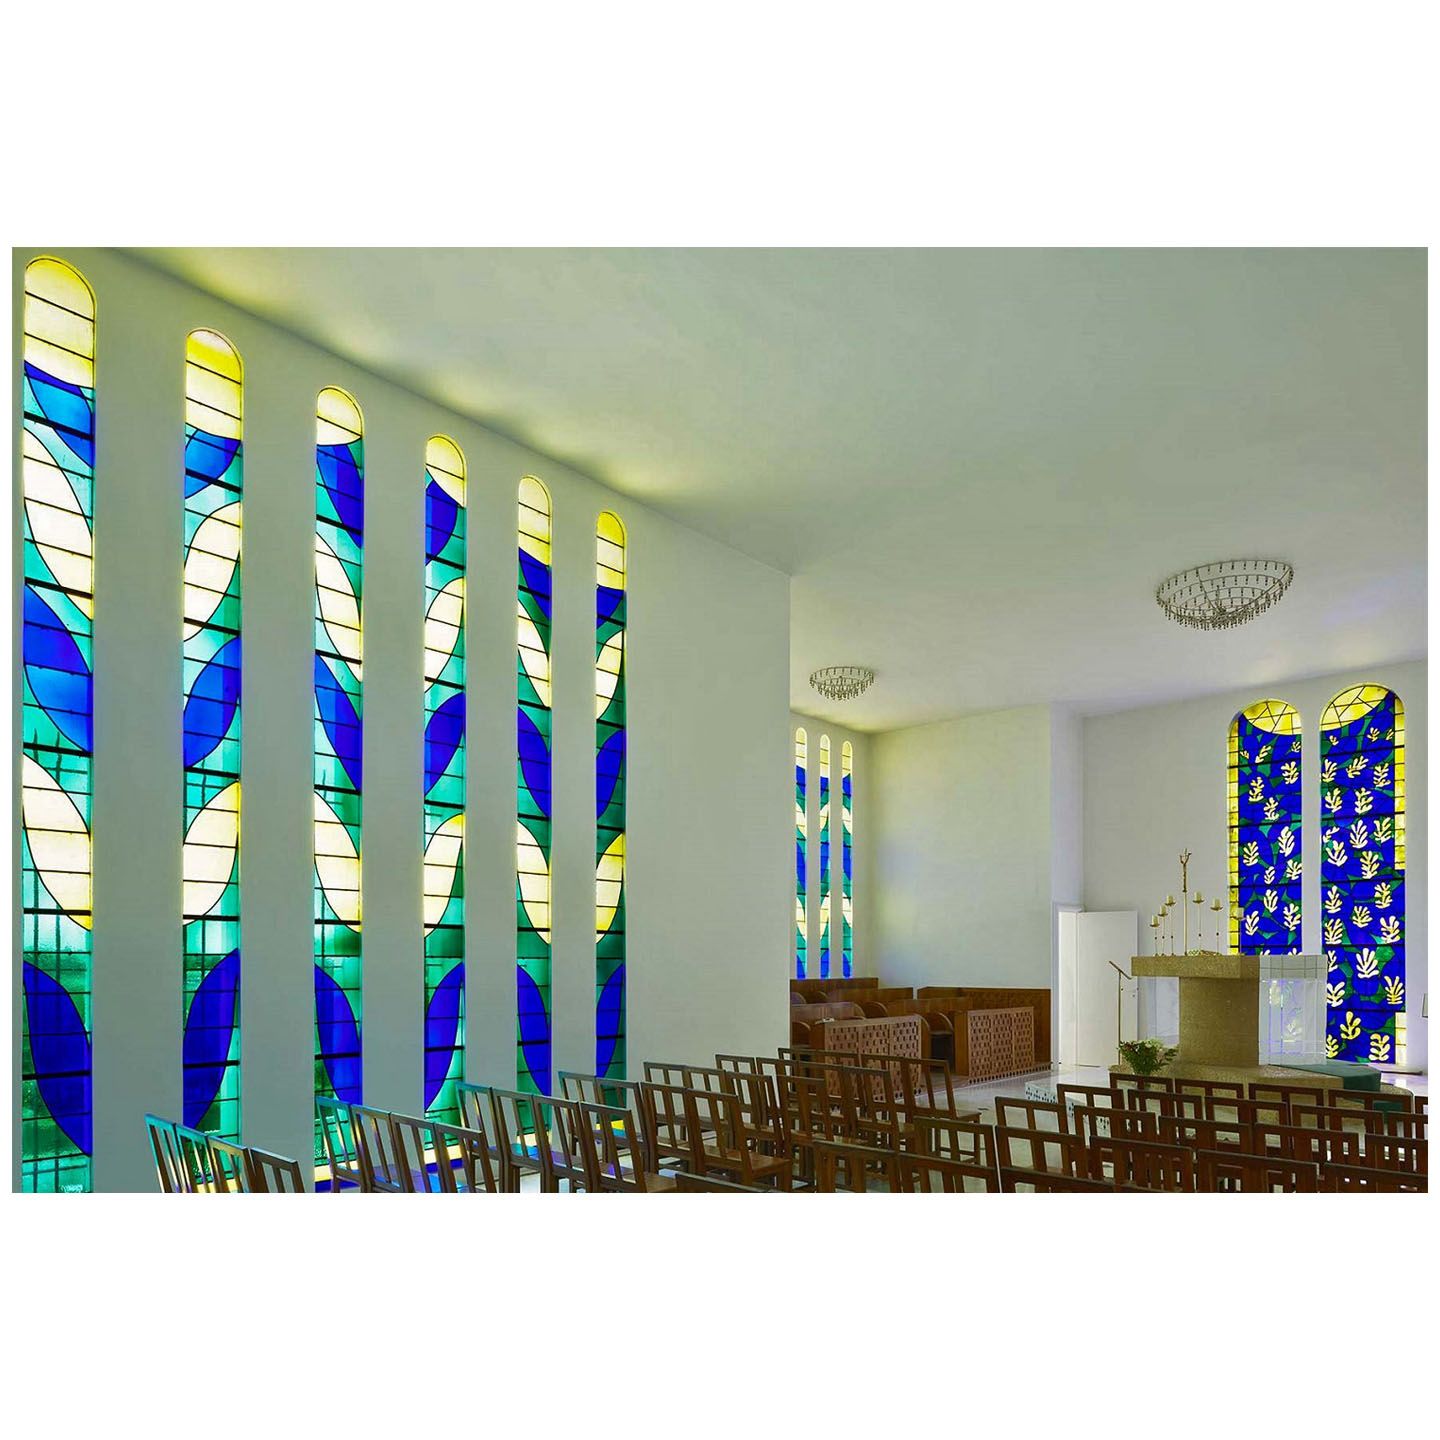 Henri Matisse. Chapelle du Rosaire. Vitrail. 1949. Vence